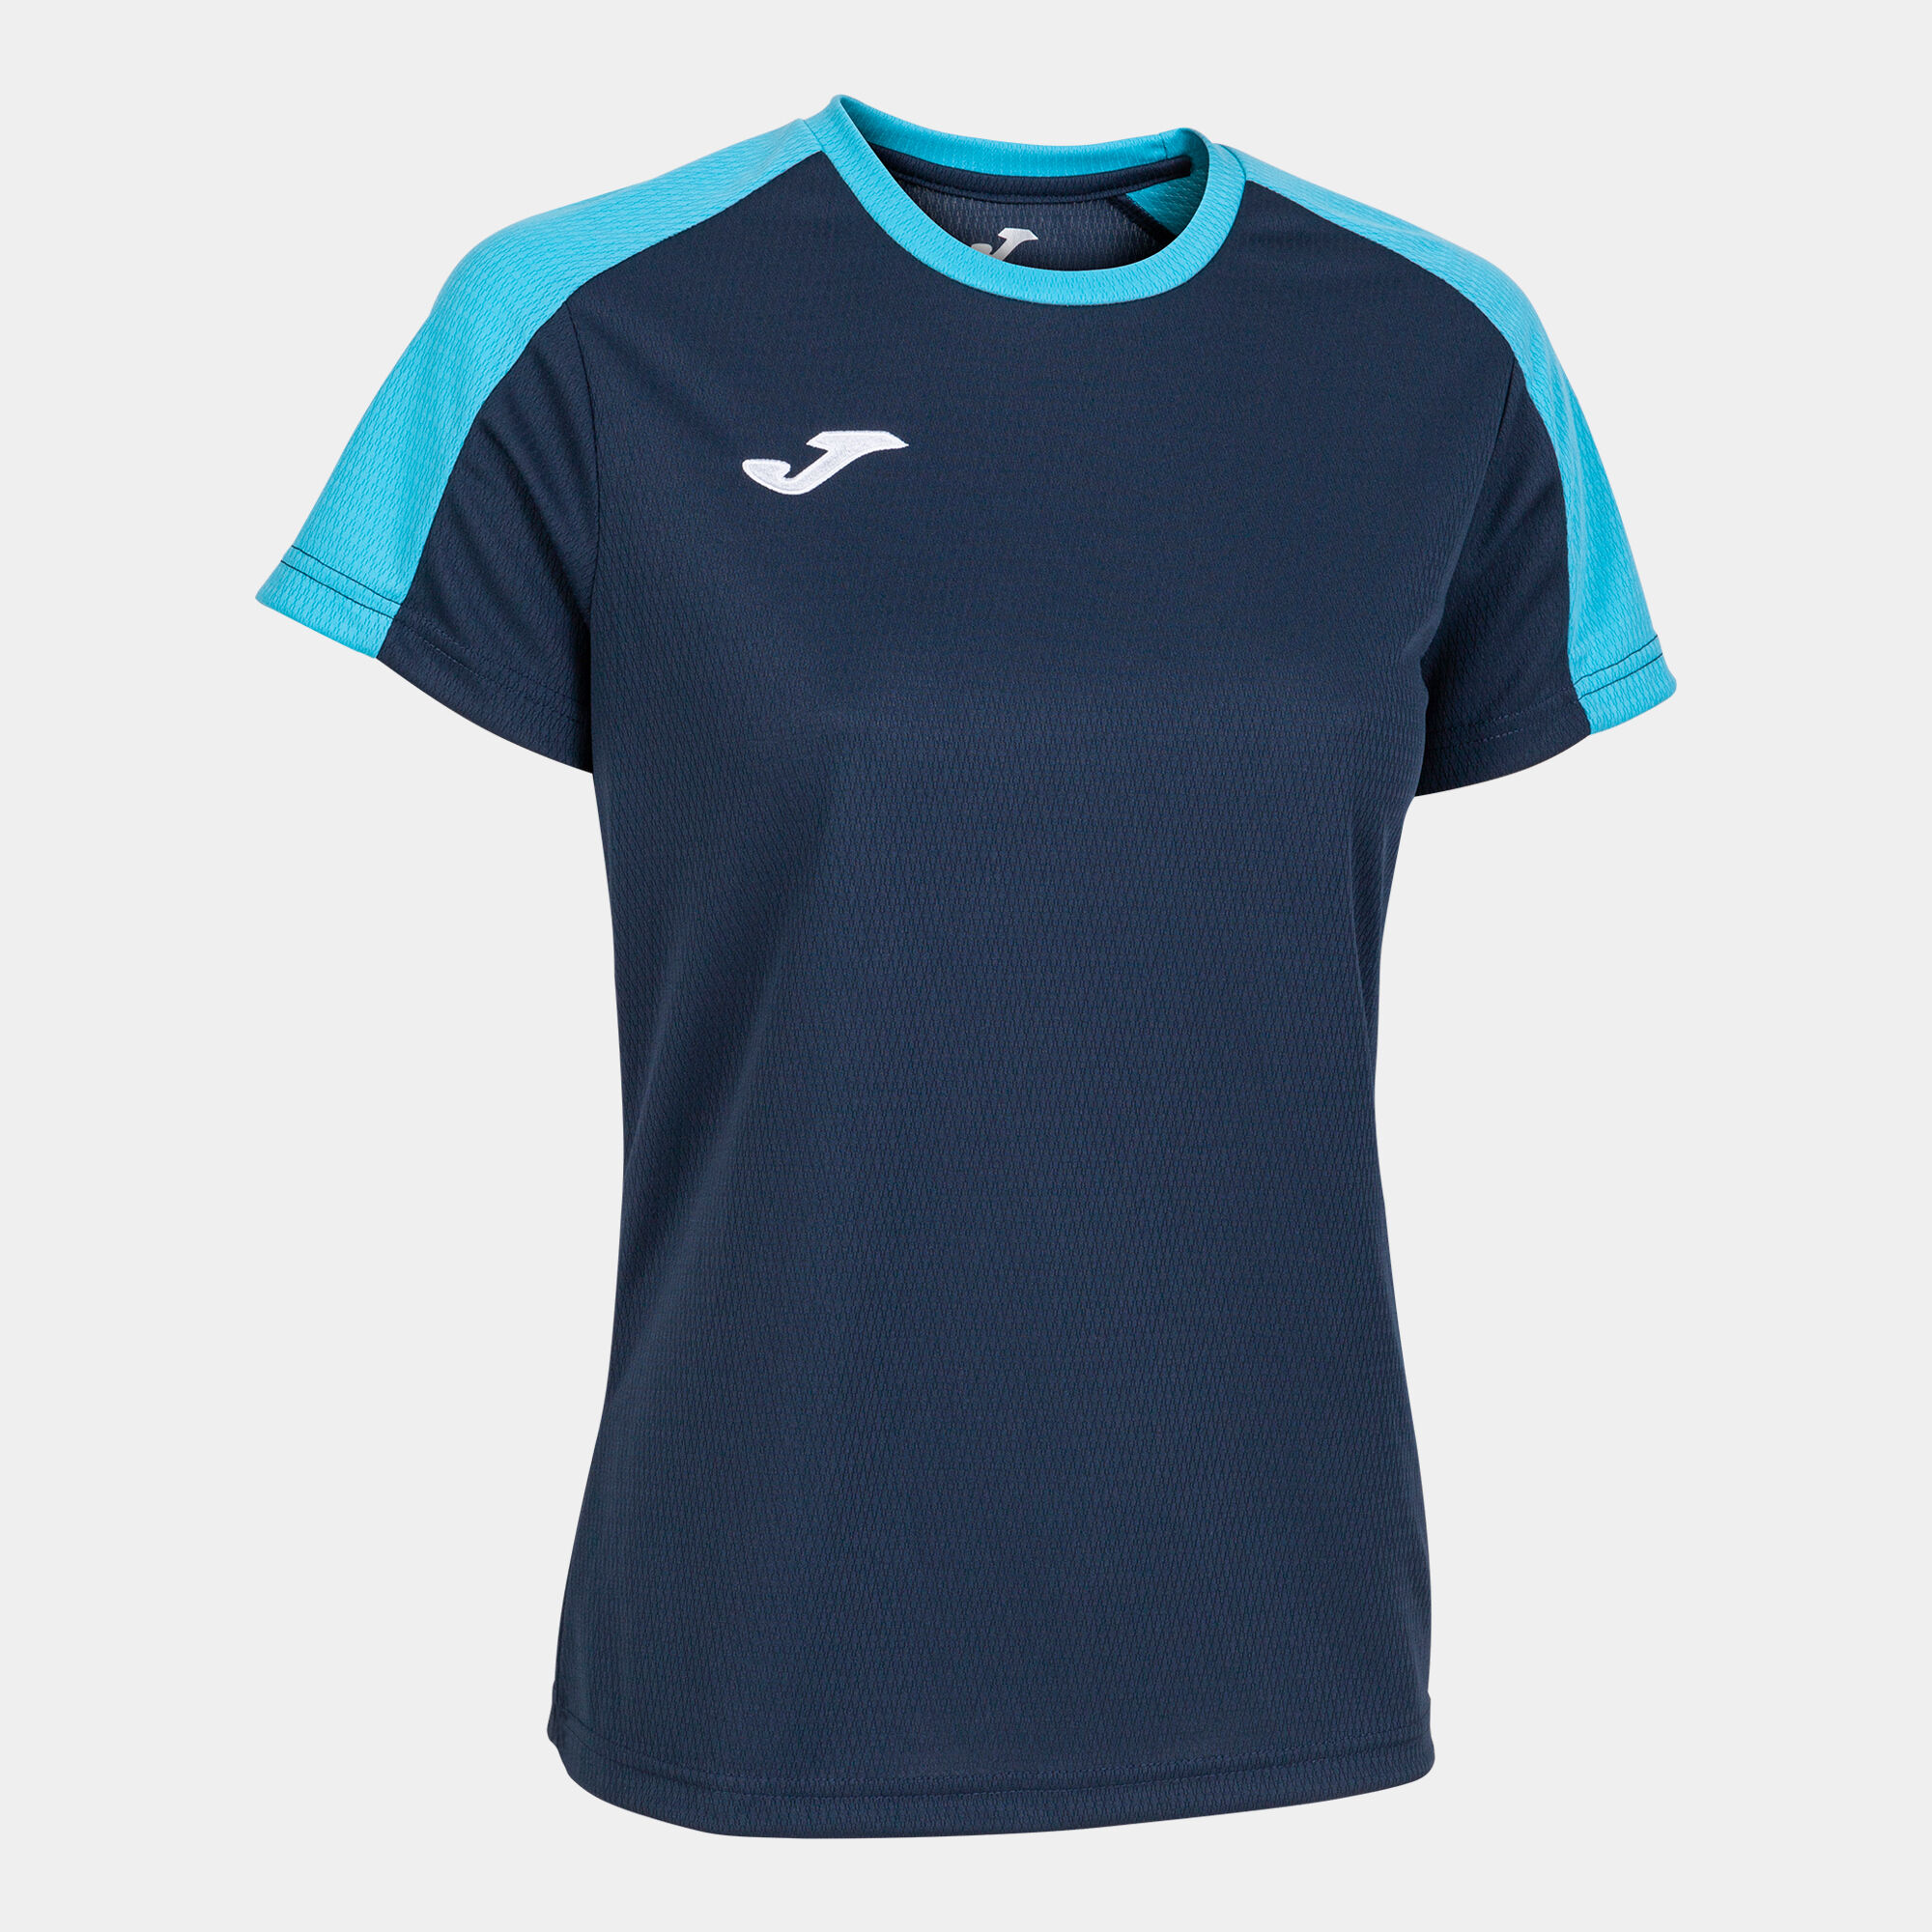 T-shirt manga curta mulher Eco Championship azul marinho azul-turquesa fluorescente